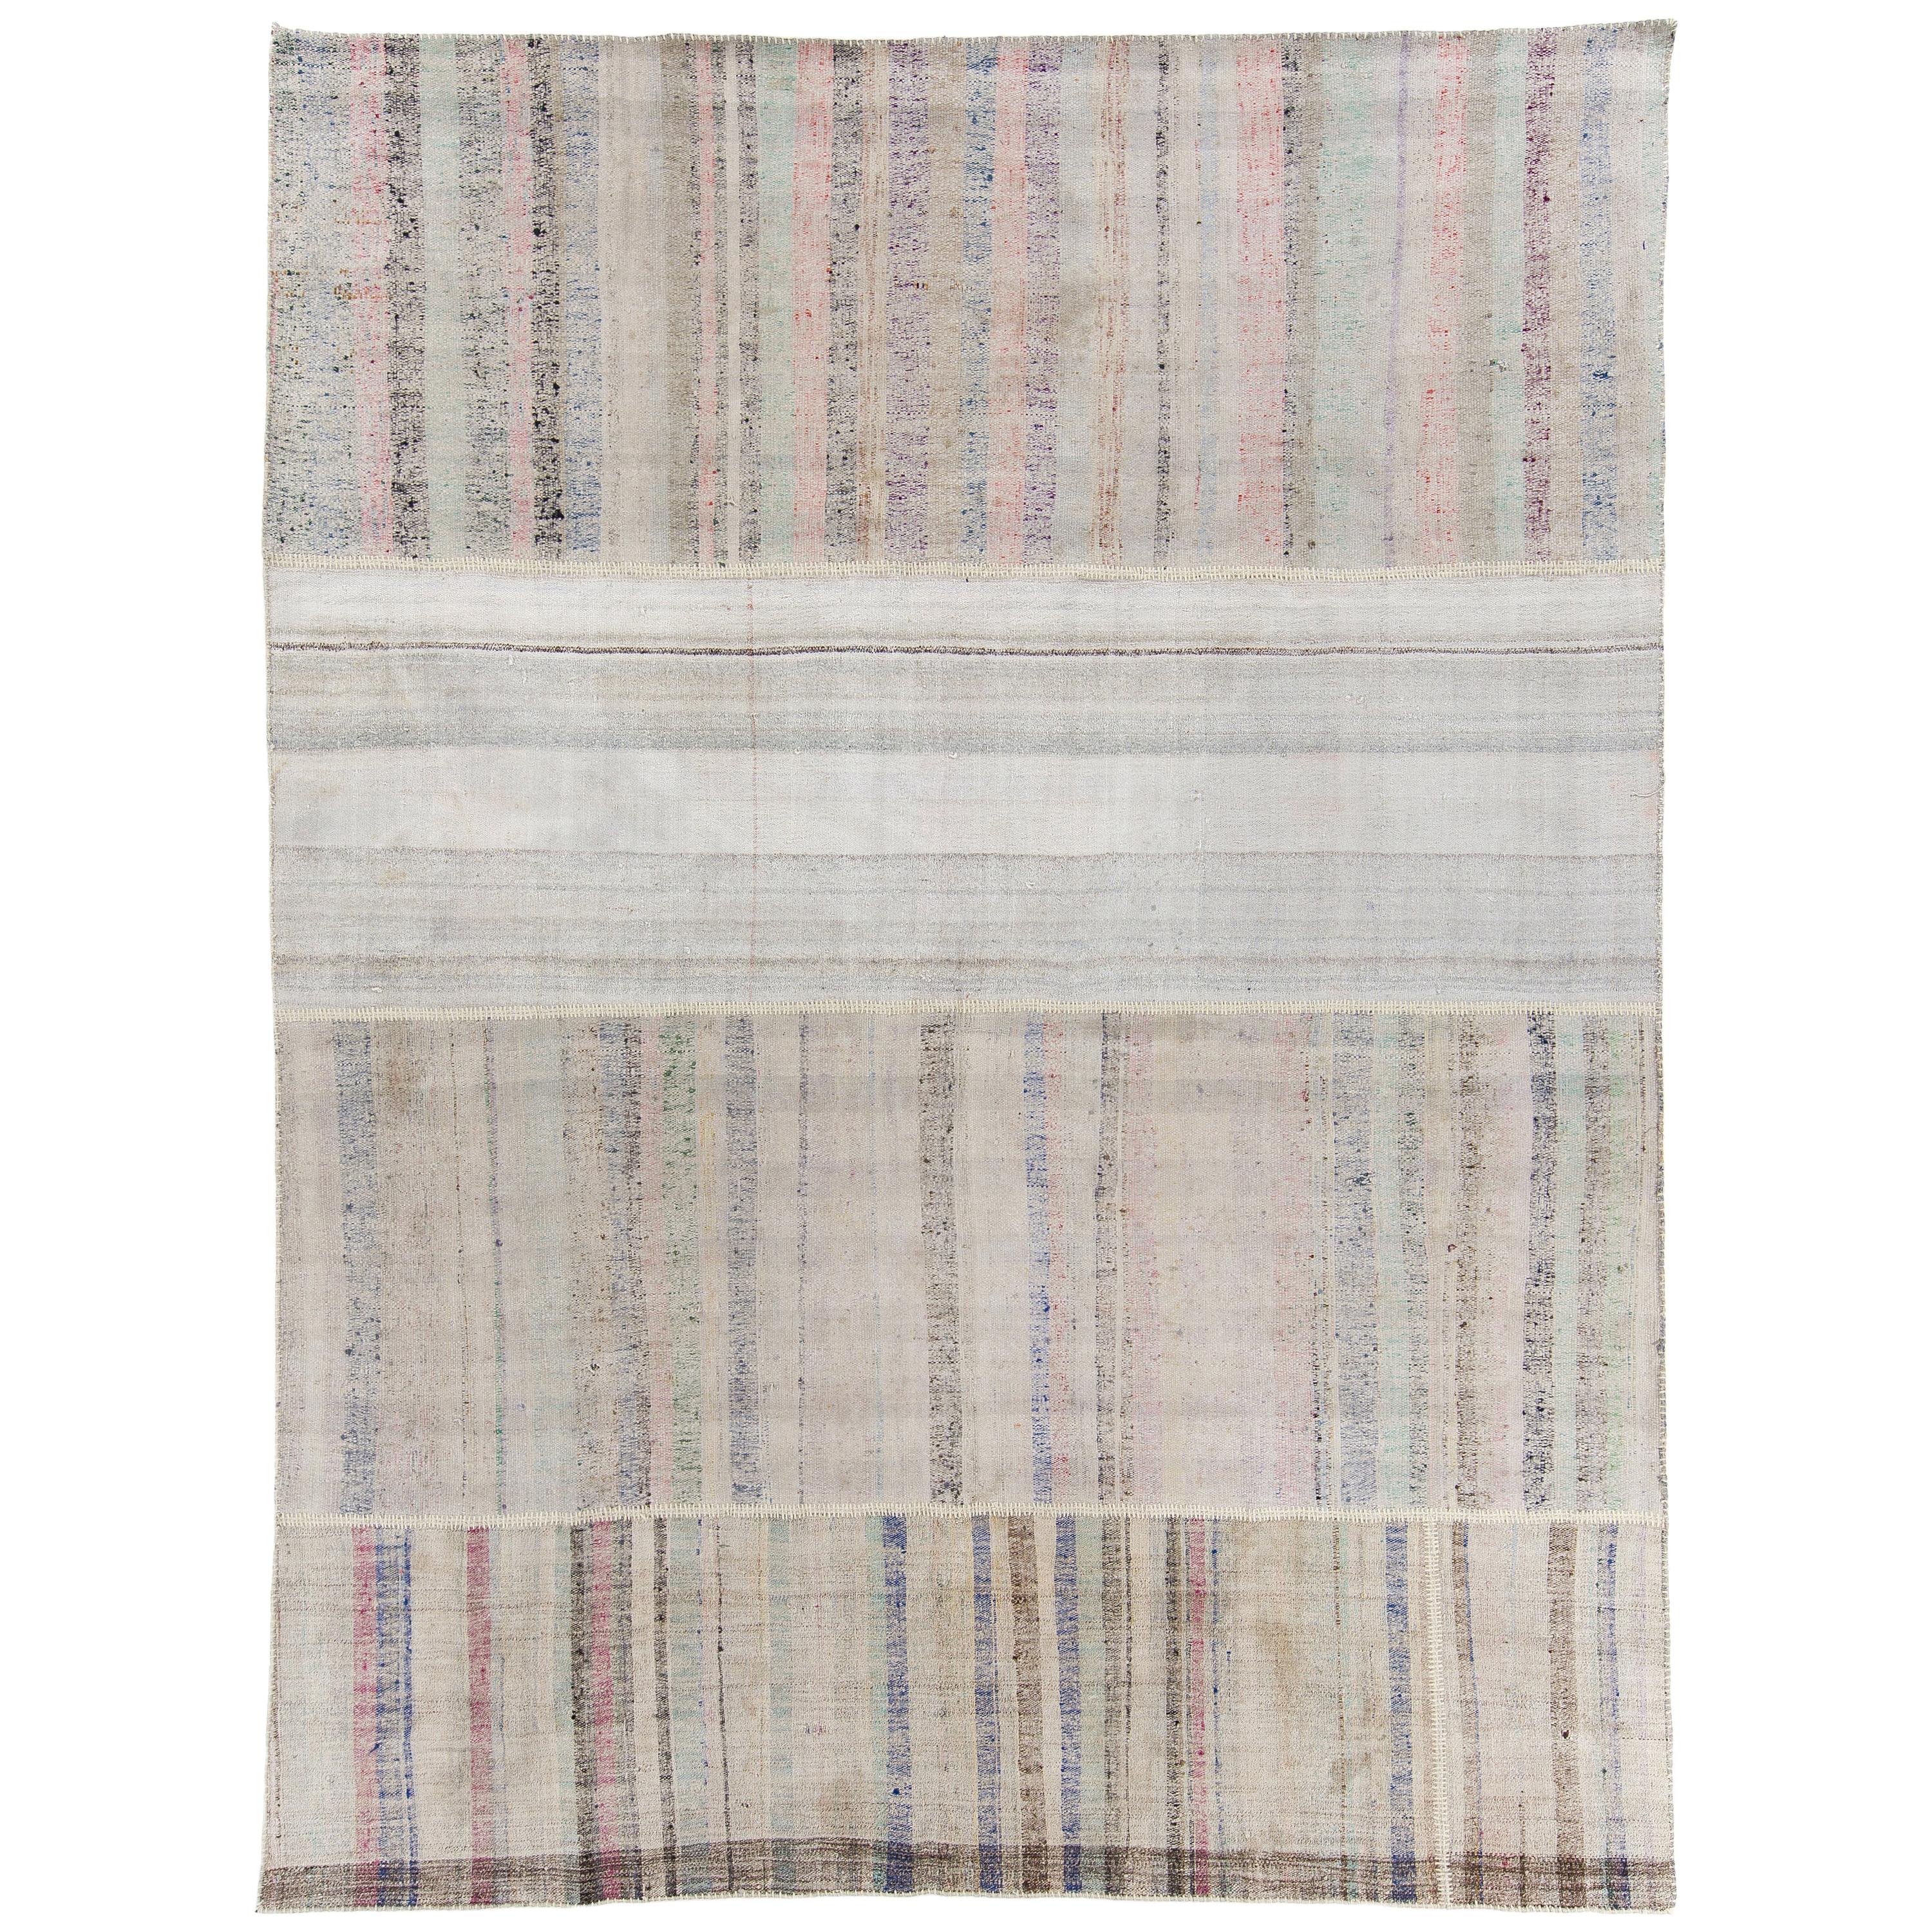 9.2x12.2 Ft Vintage Cotton Rag Rug with Colorful Stripes, Flat Weave Kilim